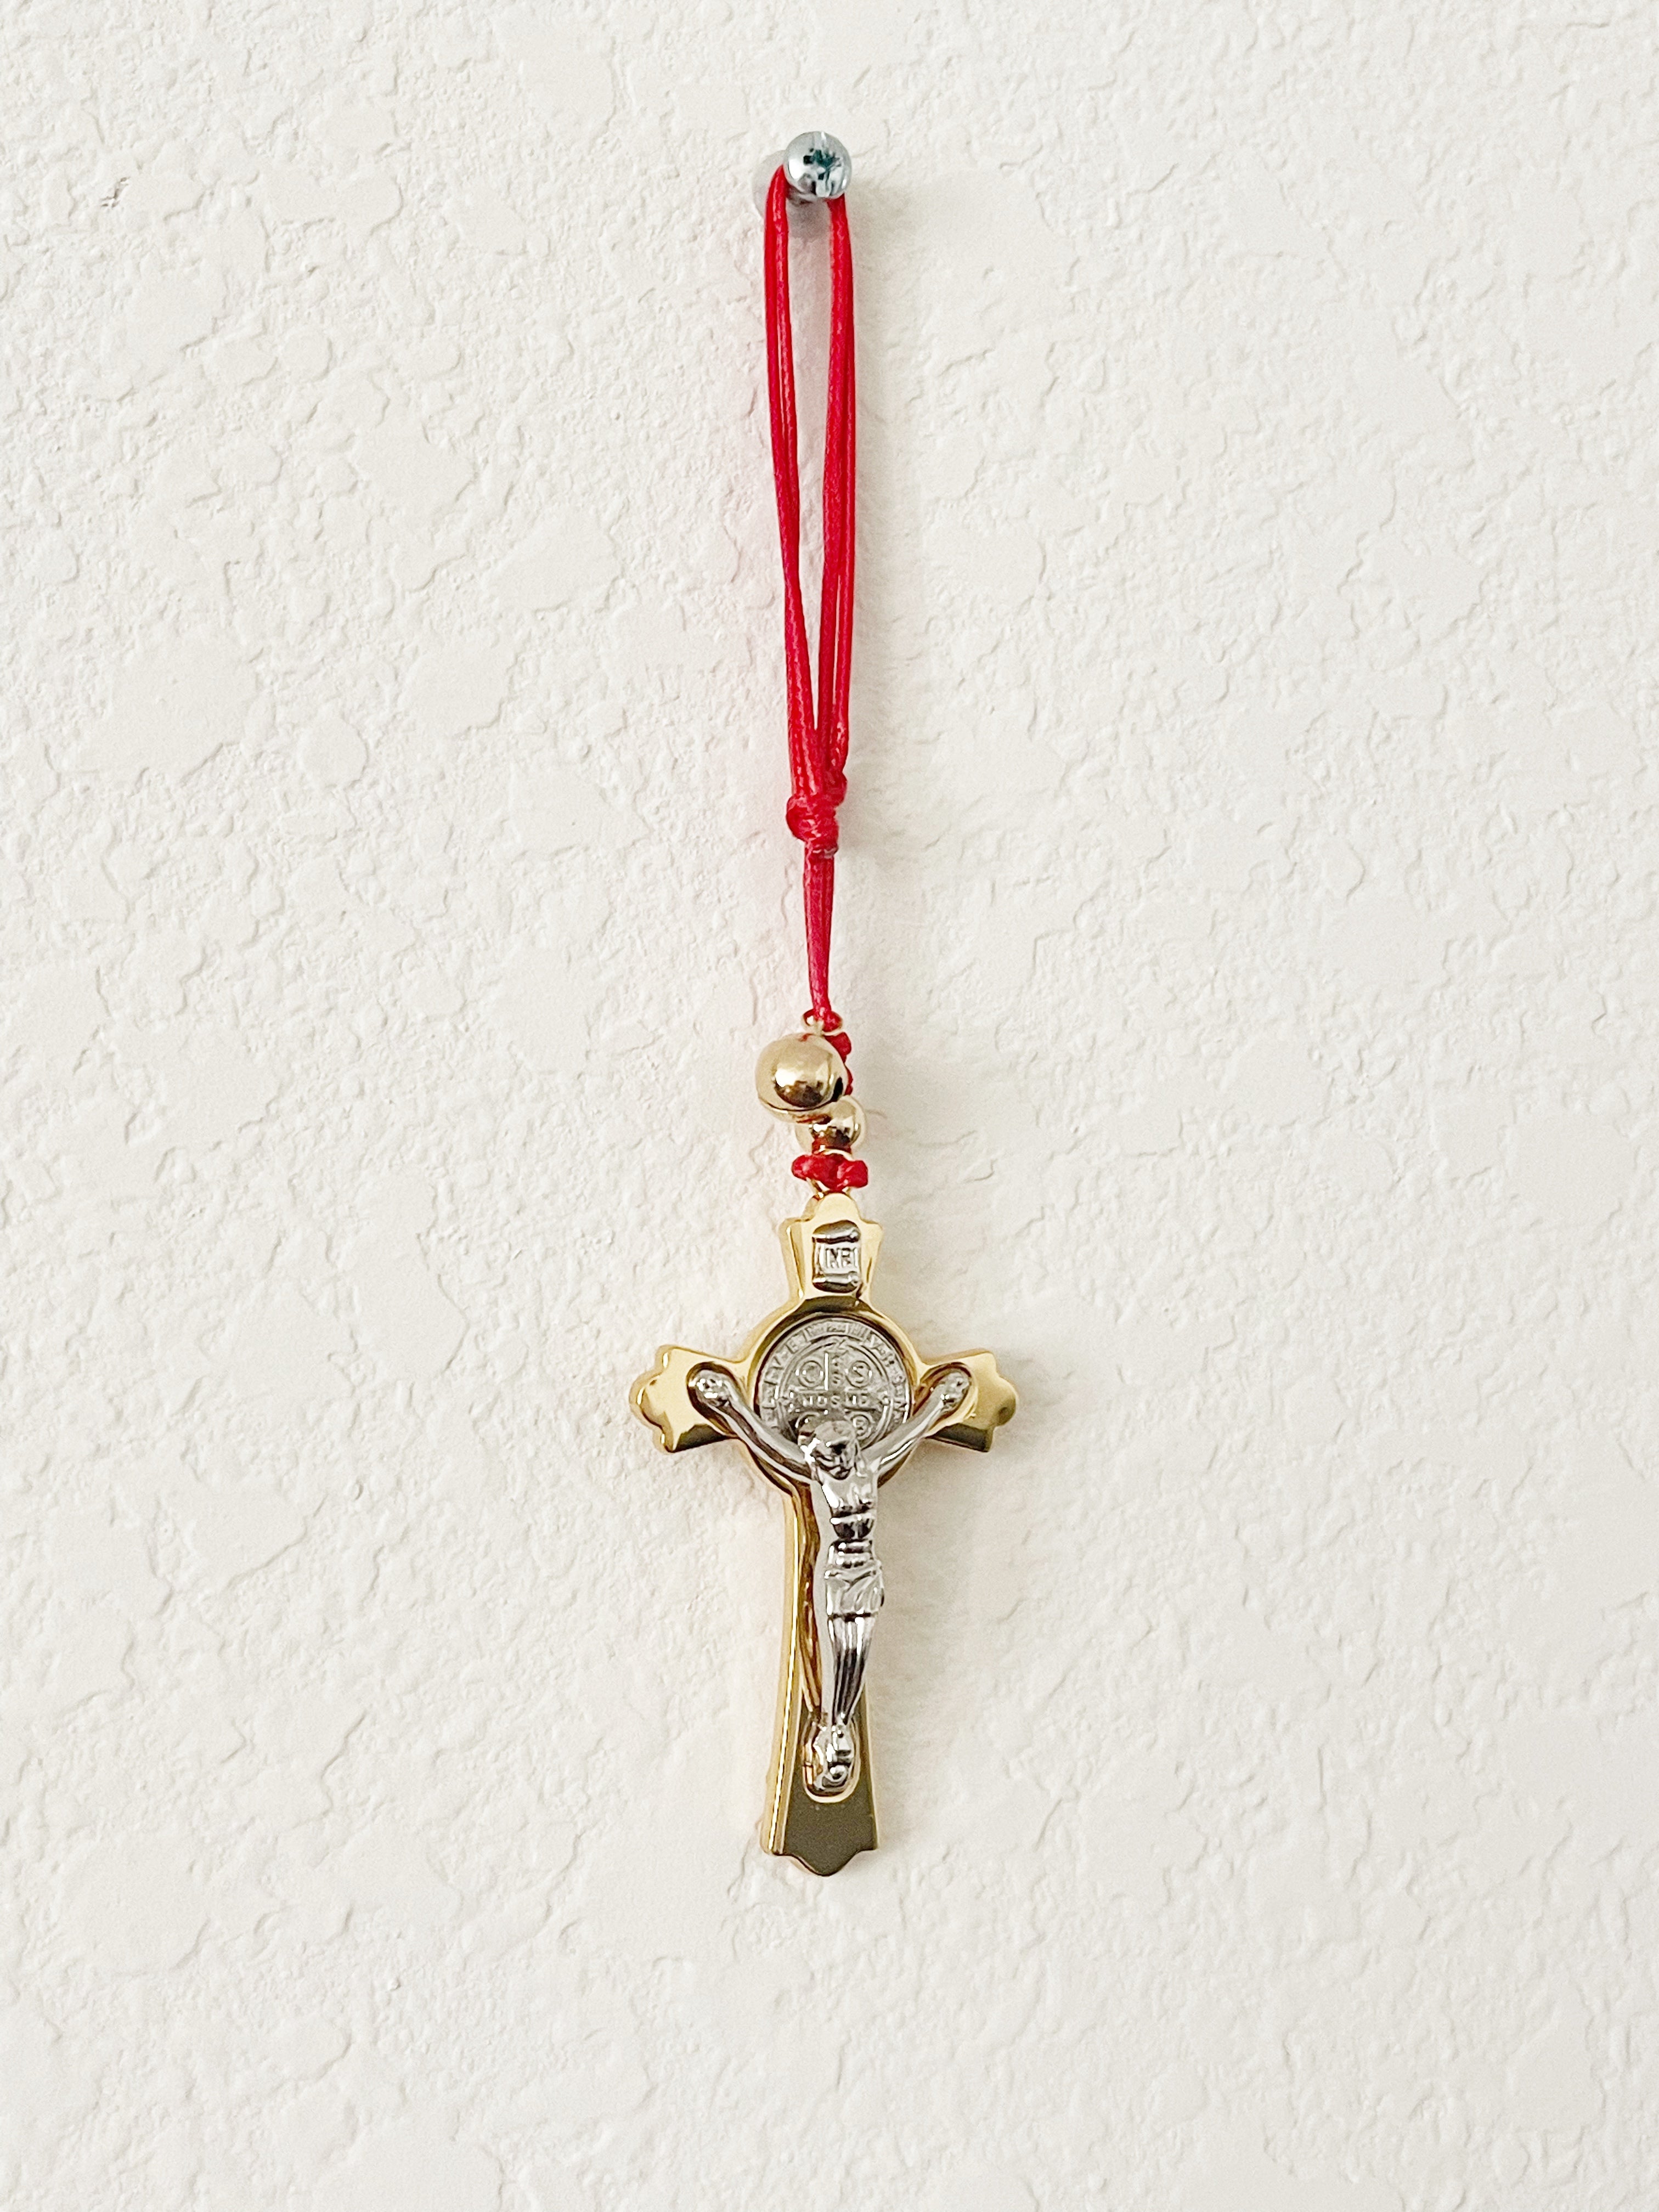 Home Protection Catholic Gift for the House Saint Benedict Cross Door Hanger